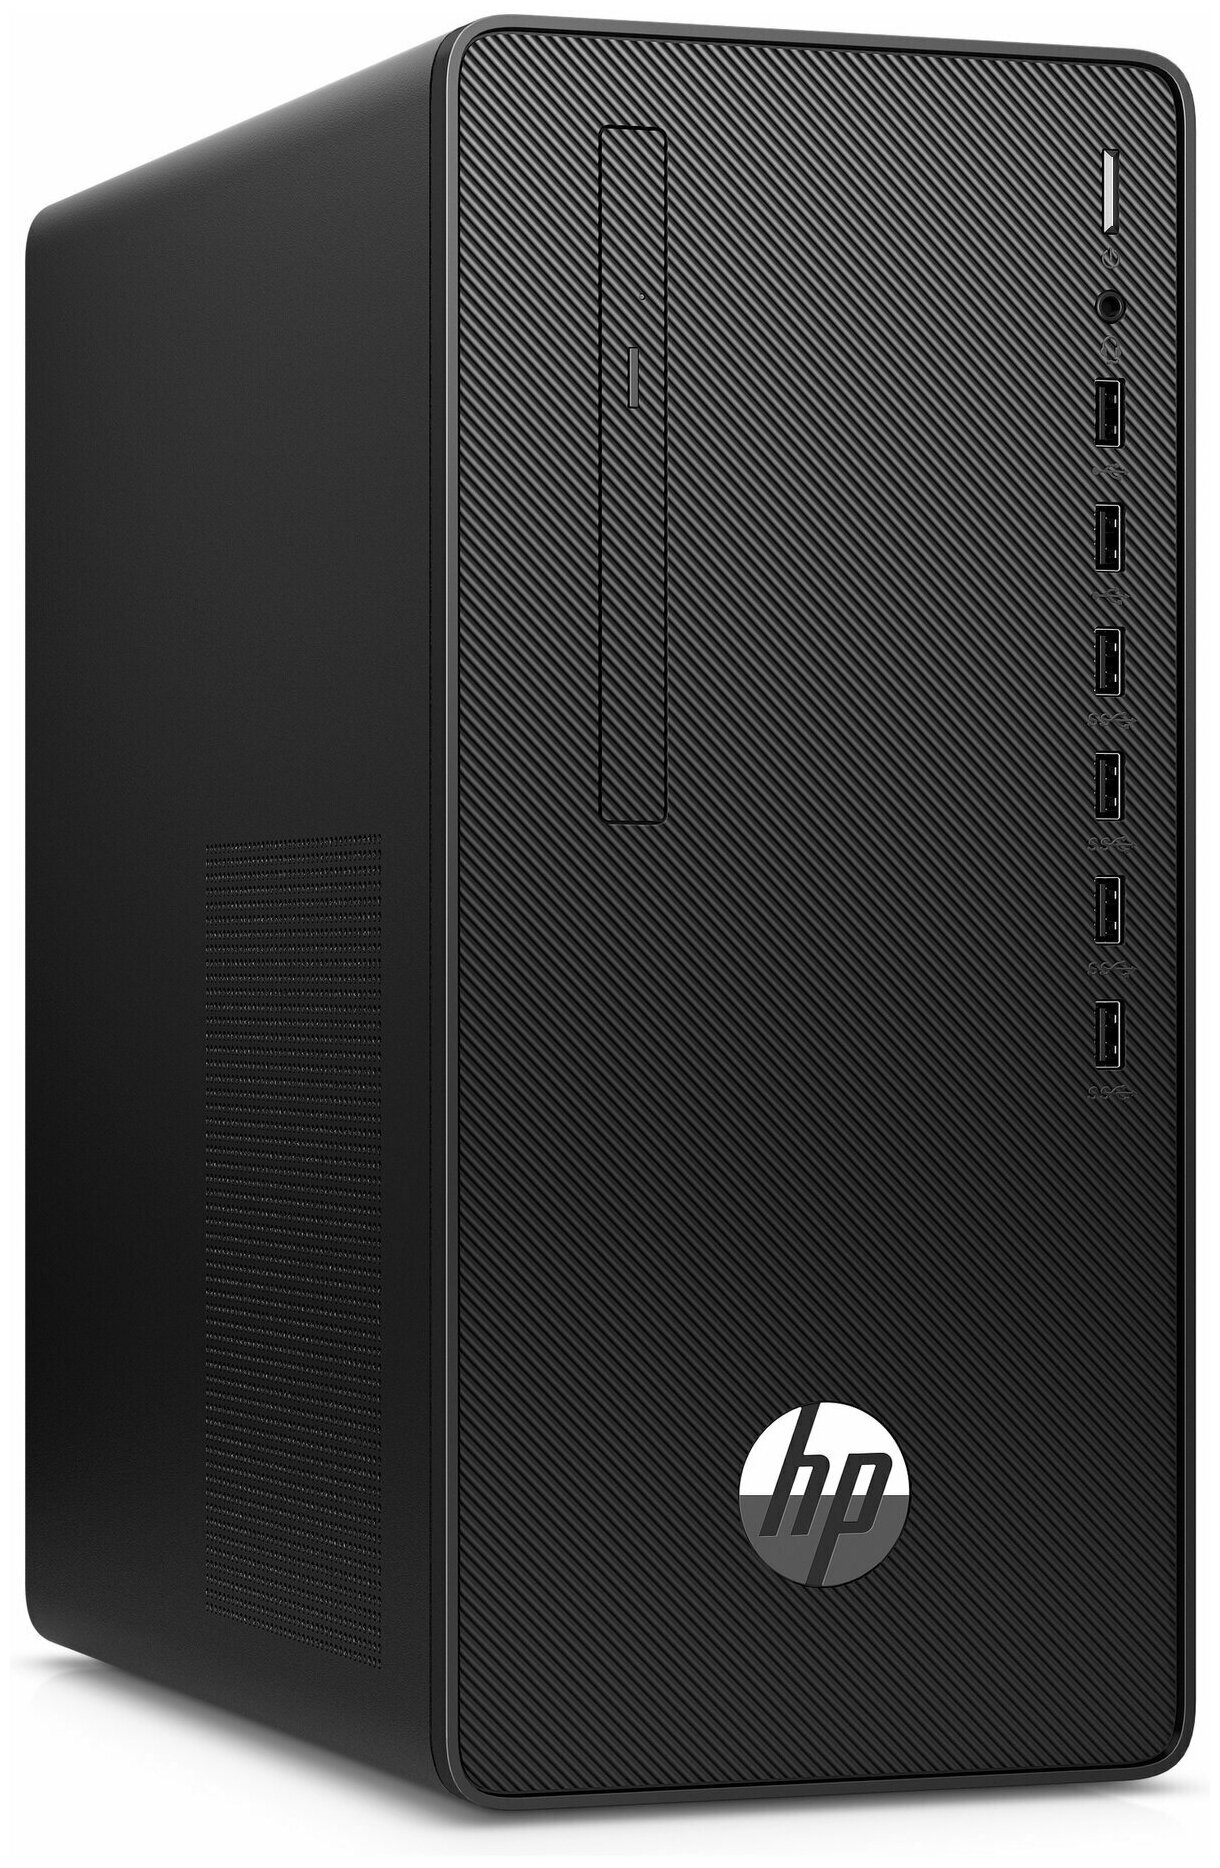 Персональный компьютер HP 295 G6 MT Athlon 3150,8GB,1TB,DVD-WR,usb kbd/mouse,Win10Pro(64-bit),1Wty